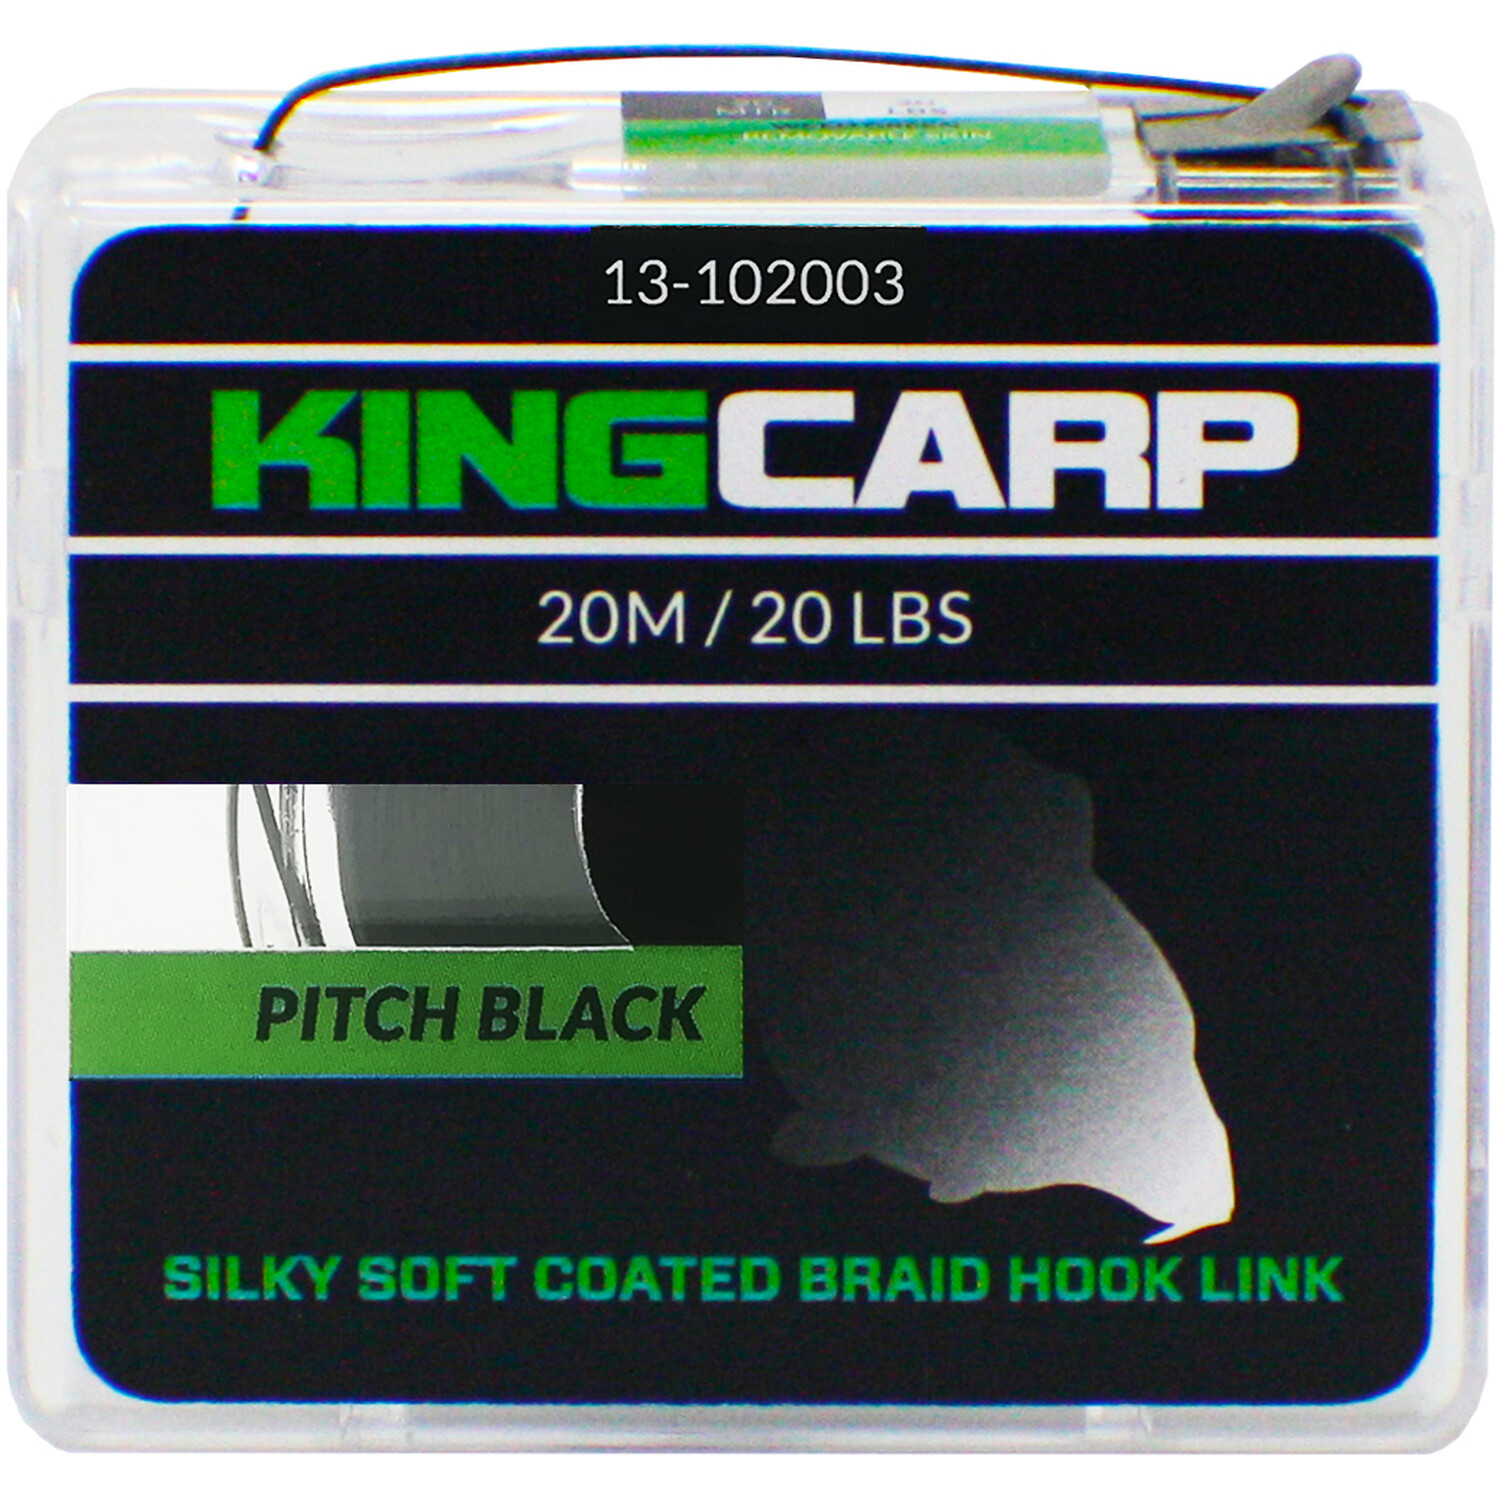 Pitch Black King Carp Coated Braid Hook Link Image 1